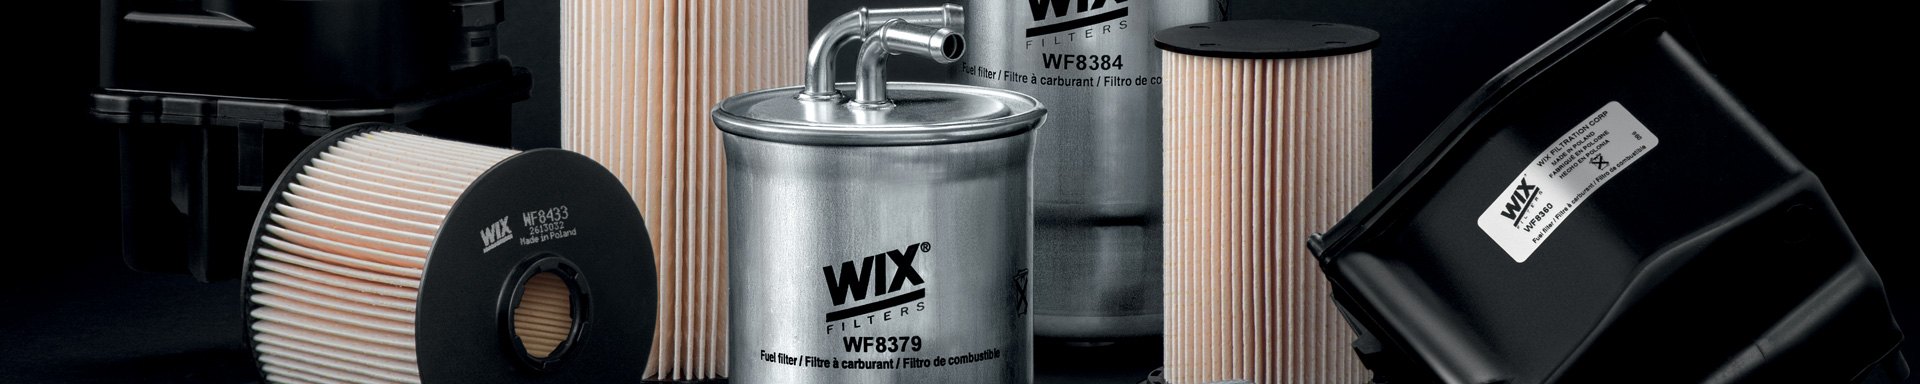 WIX Oil Change Tools